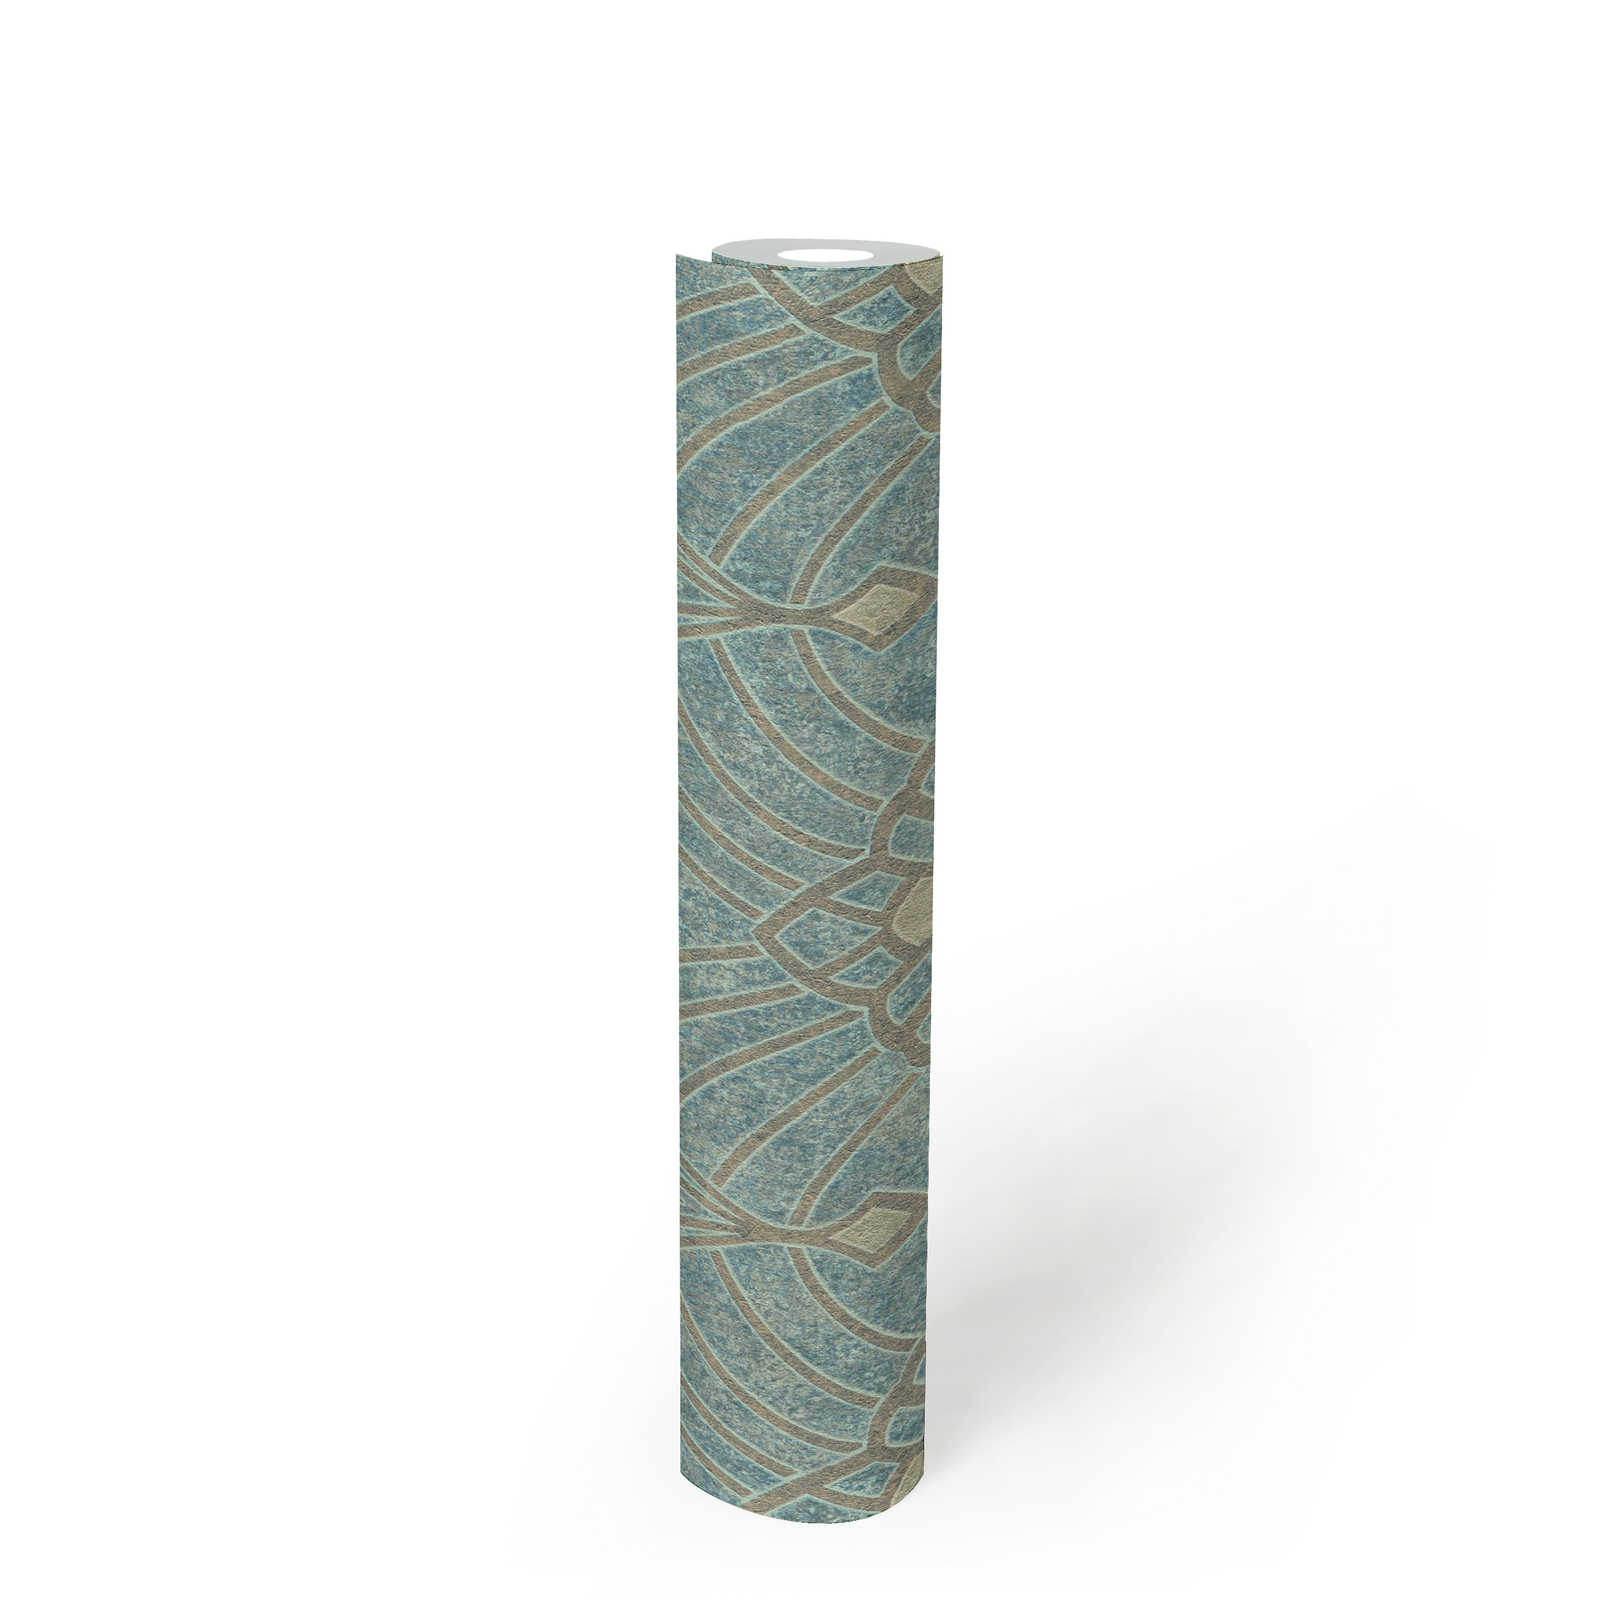             Art Deco Tapete Grün mit Metallic Muster & Struktureffekt
        